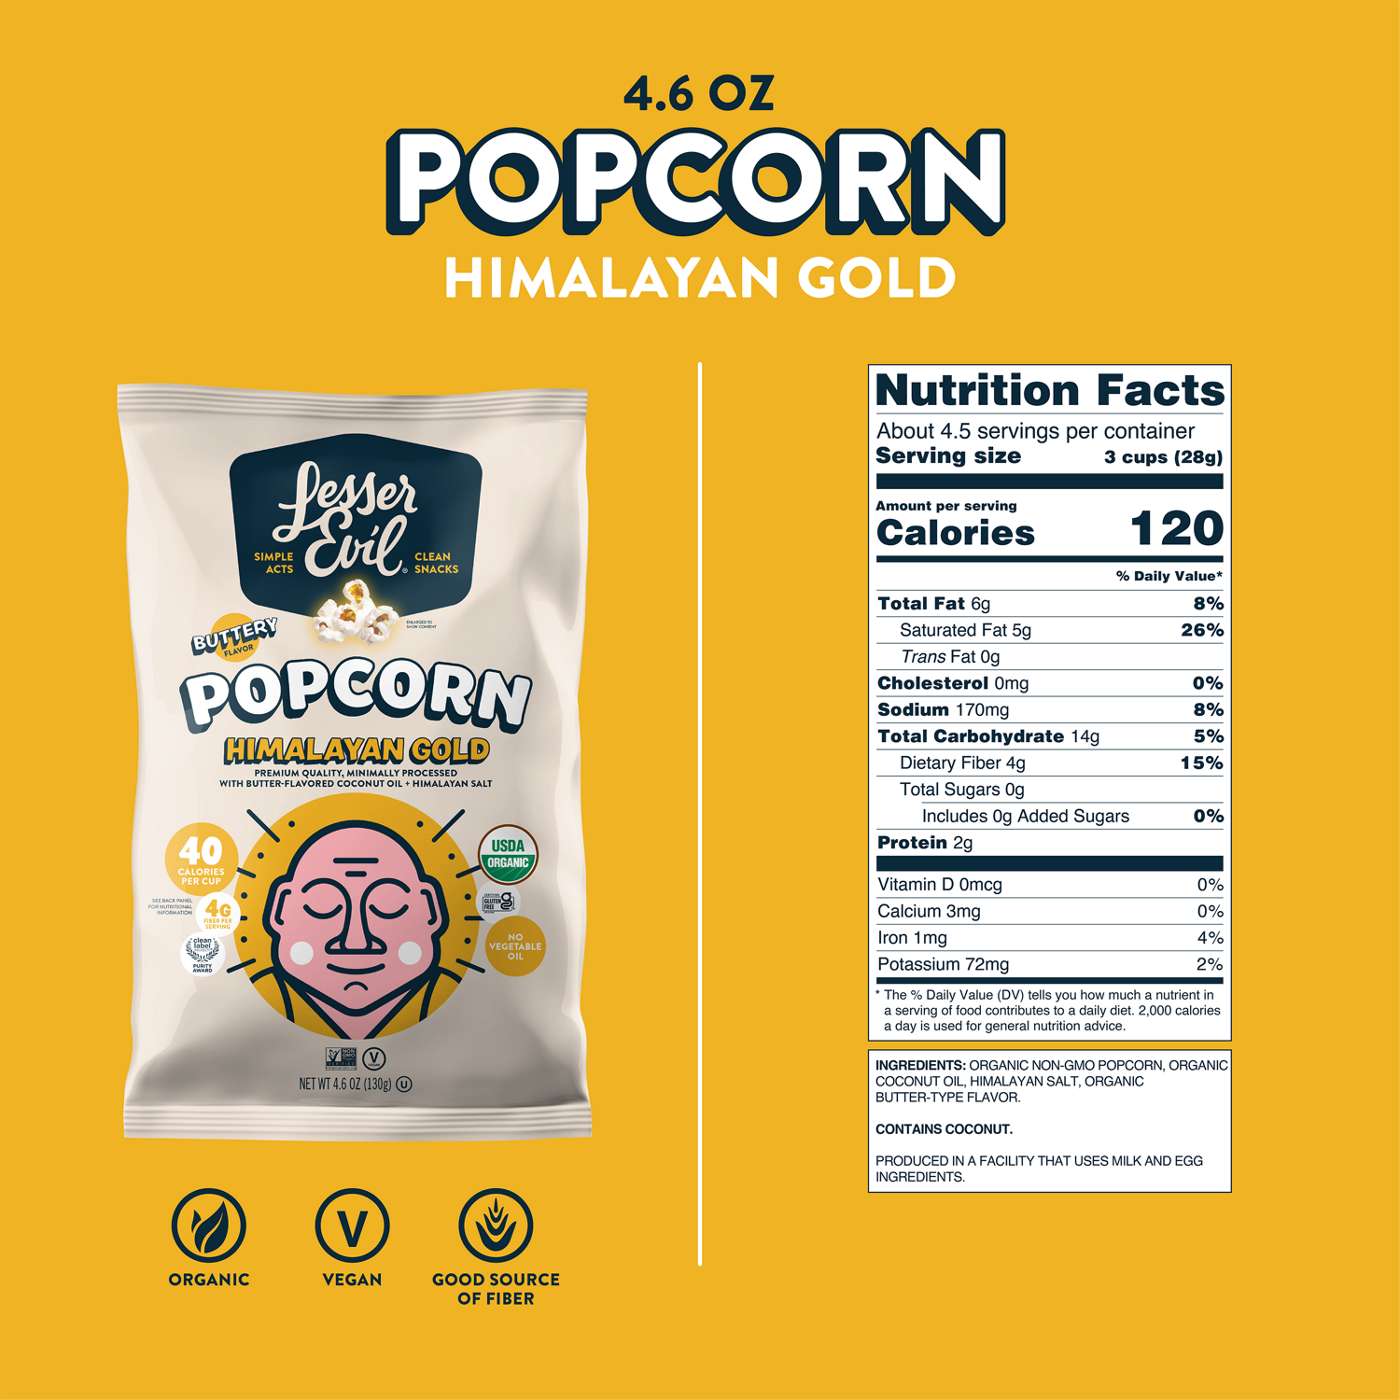 Lesser Evil Organic Popcorn Himalayan Gold; image 2 of 4